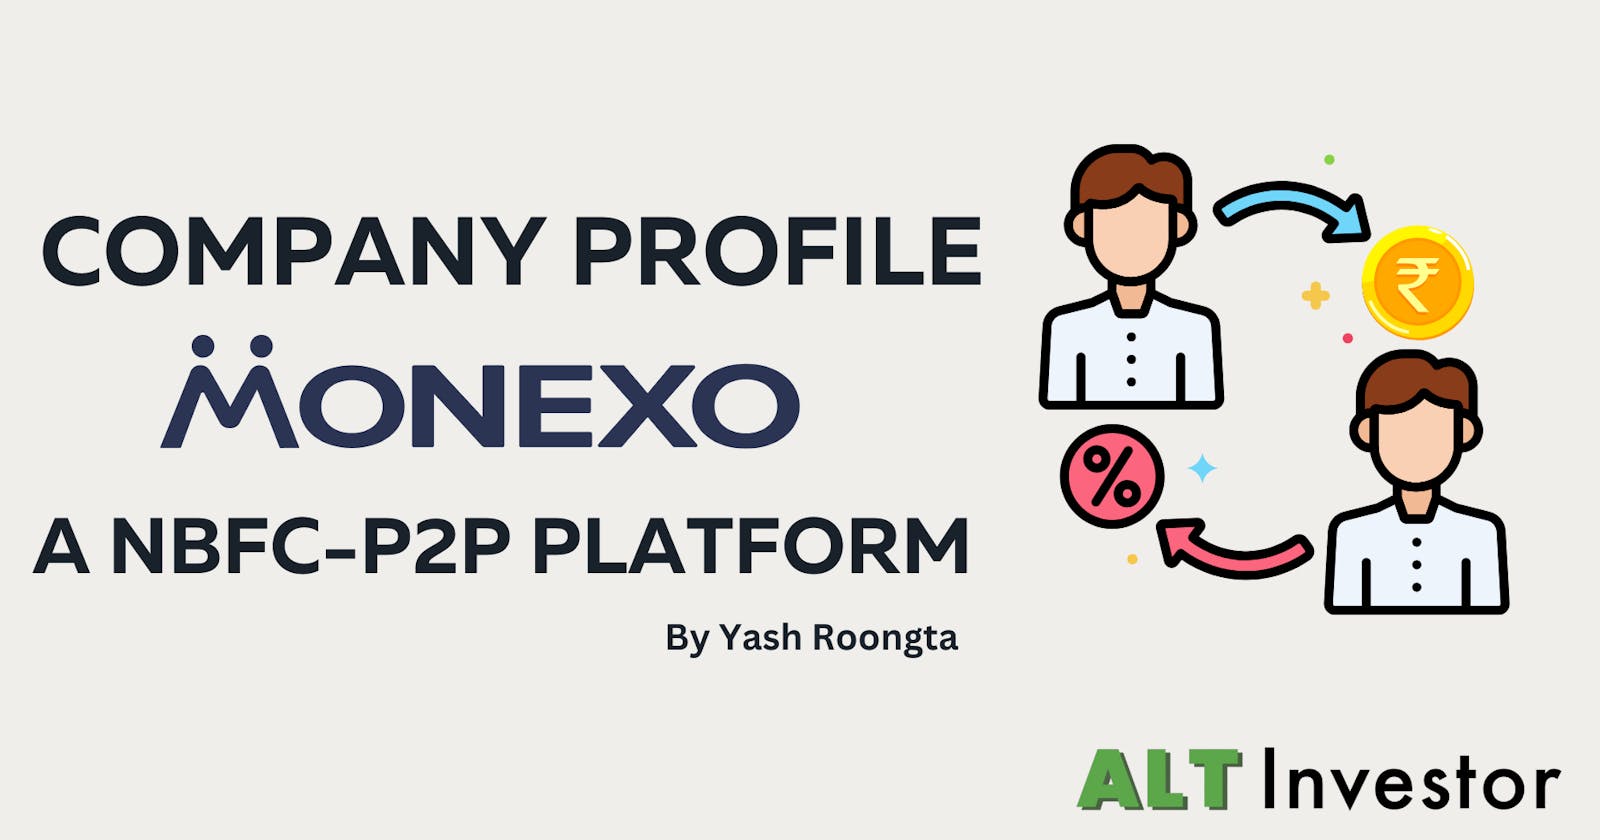 Company Profile: Monexo (P2P Lending Platform)